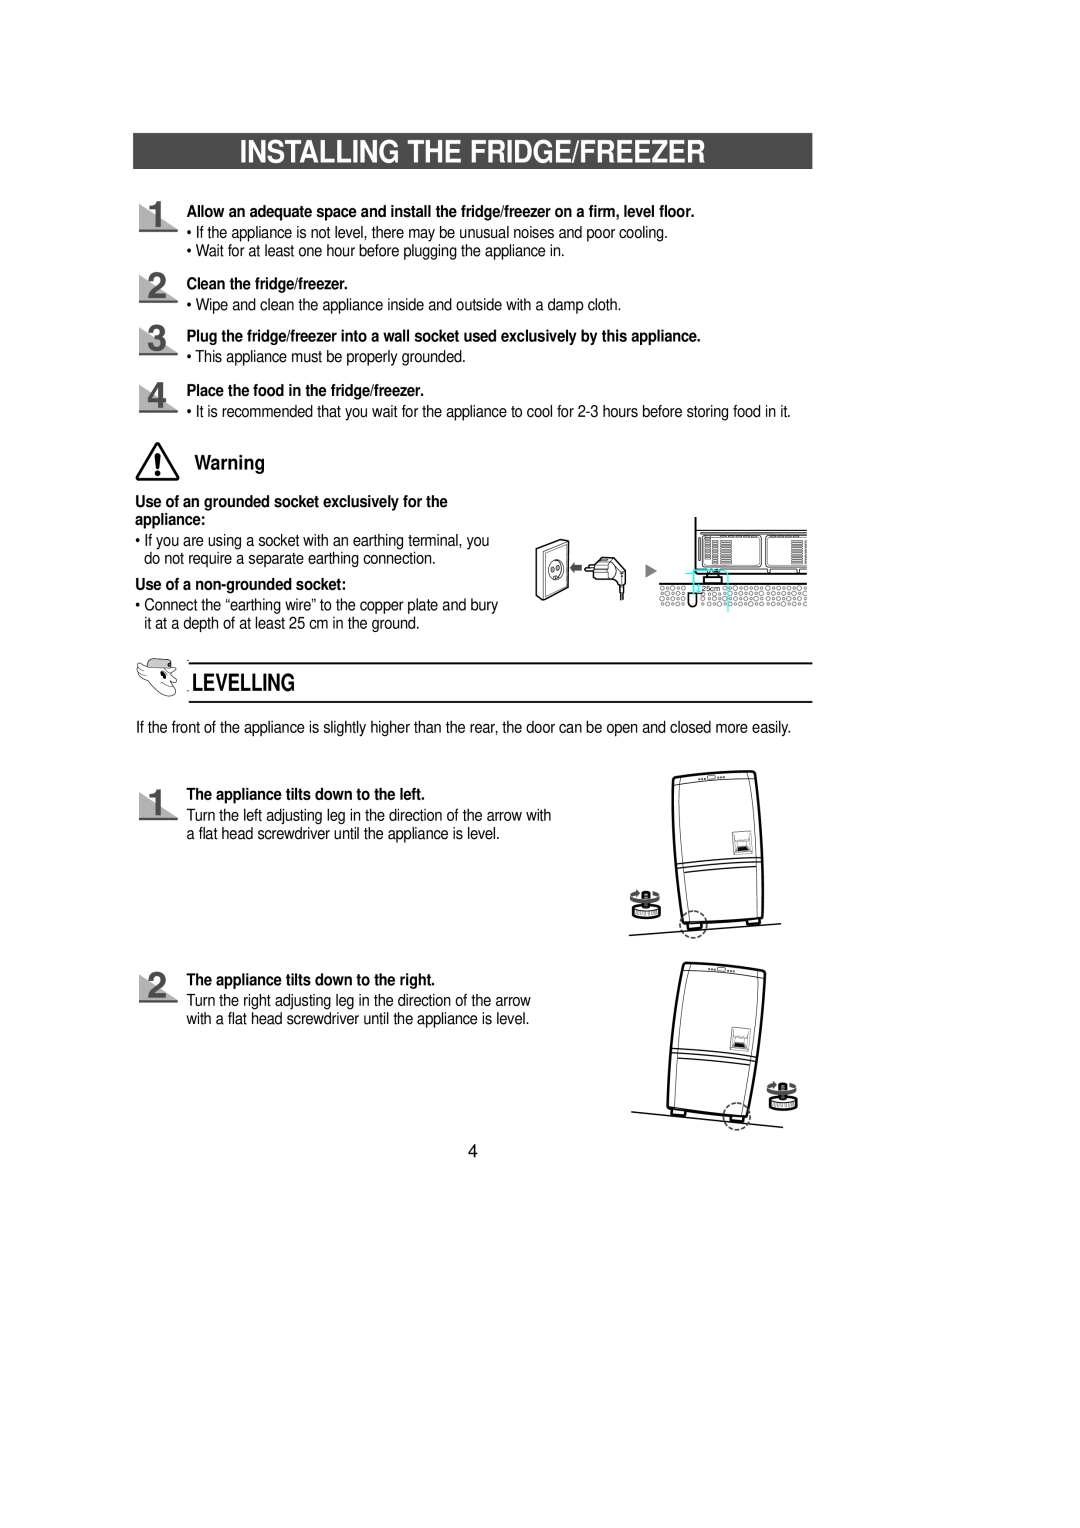 Samsung DA68-01281A manual Installing The Fridge/Freezer, Levelling, Clean the fridge/freezer, Use of a non-groundedsocket 